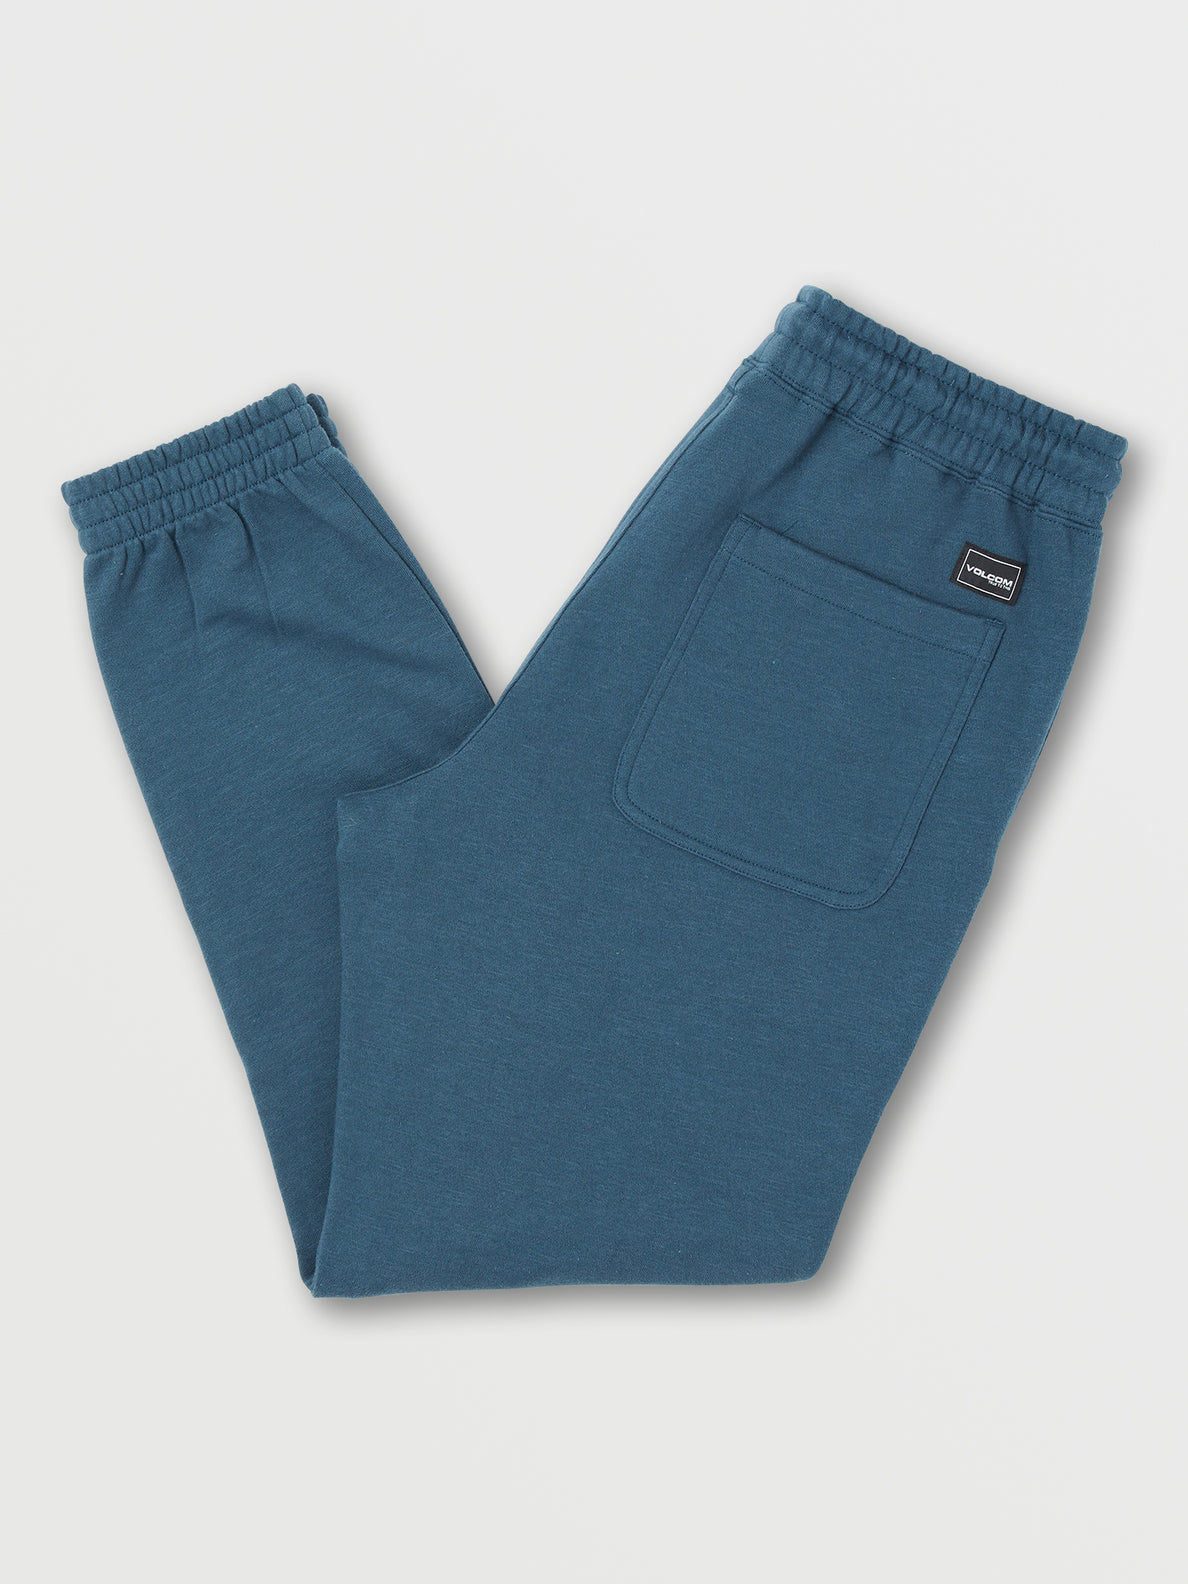 Booker Plus Fleece Pants - Marina Blue (A1232207_MRB) [B]